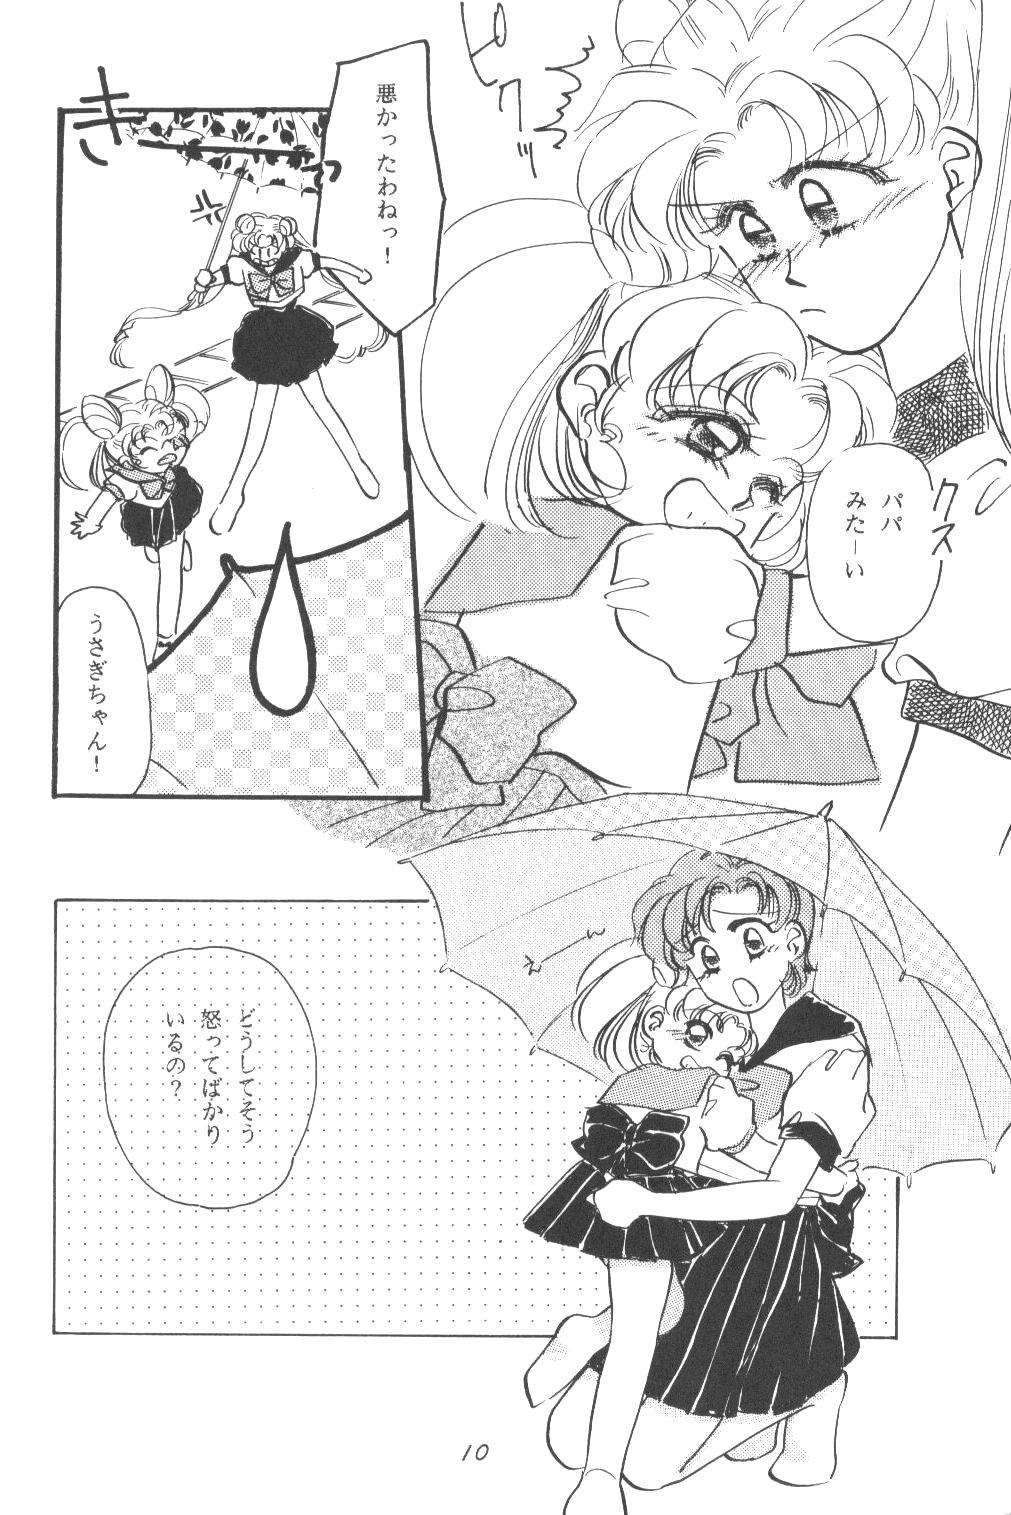 Spy Camera Chibiusa - Sailor moon Pete - Page 9